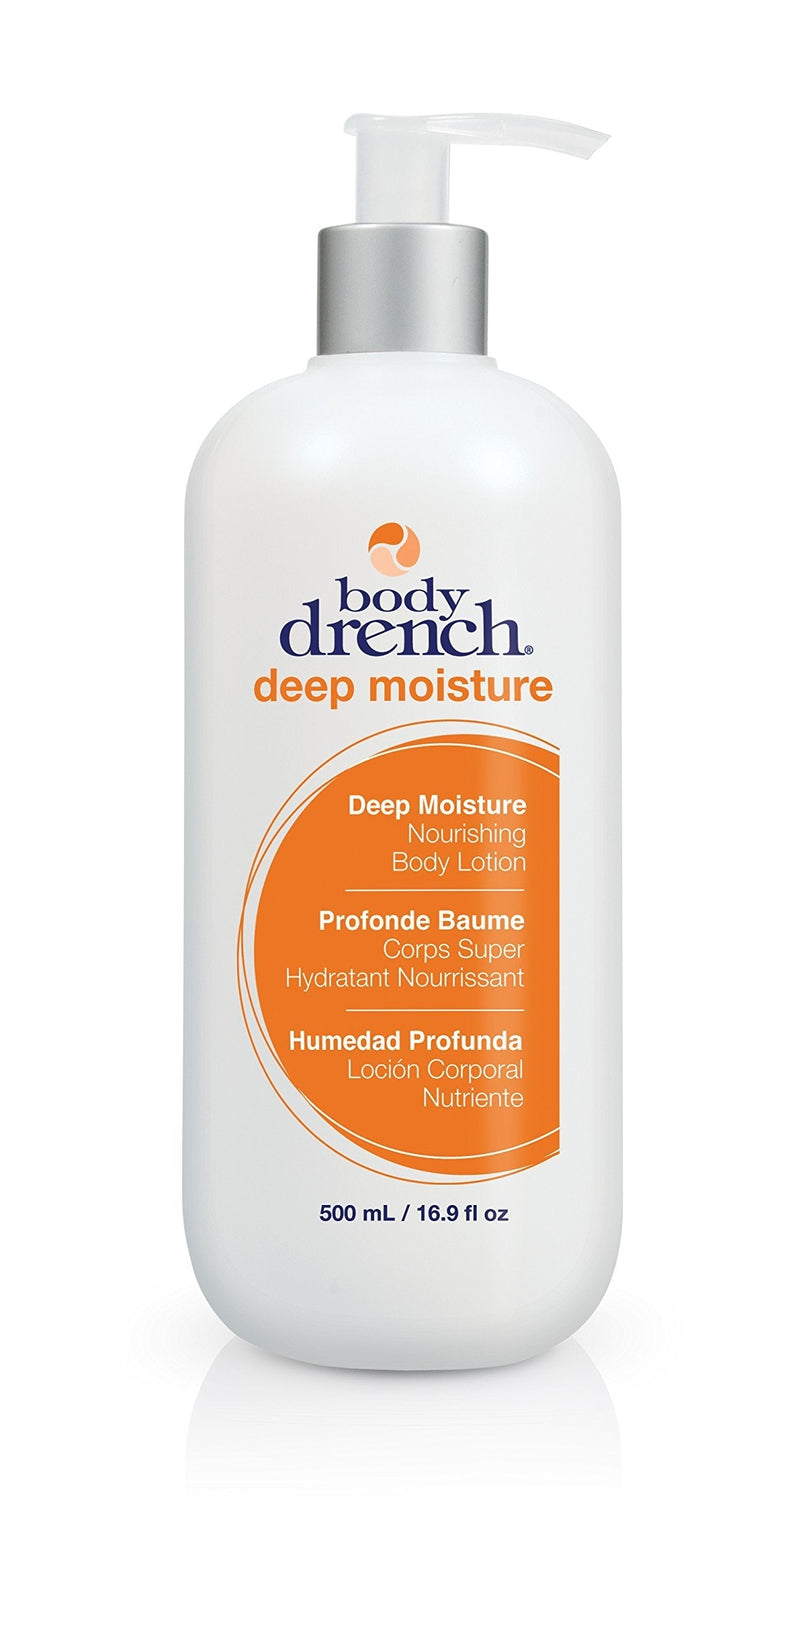 [Australia] - Body Drench Deep Moisture Nourishing Body Lotion for All Skin Types, 16.9 Fl Oz 